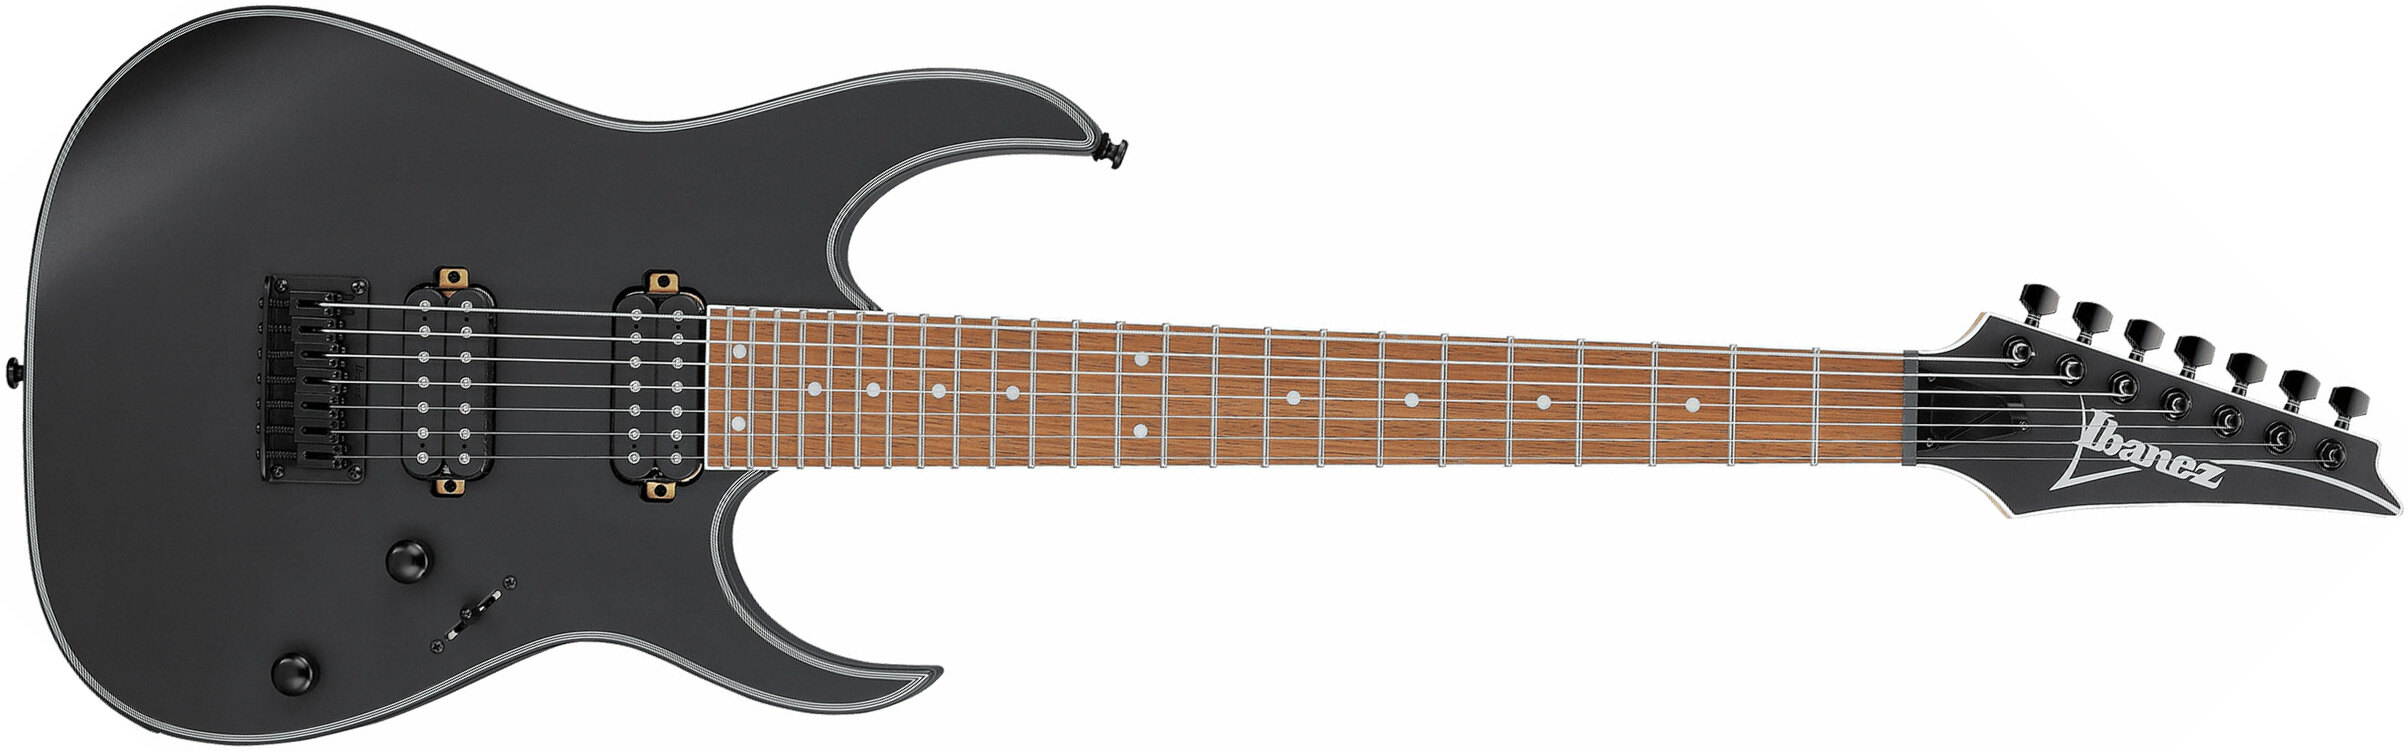 Ibanez Rg7421ex Bkf Standard 7c 2h Ht Jat - Black Flat - Guitarra eléctrica de 7 cuerdas - Main picture